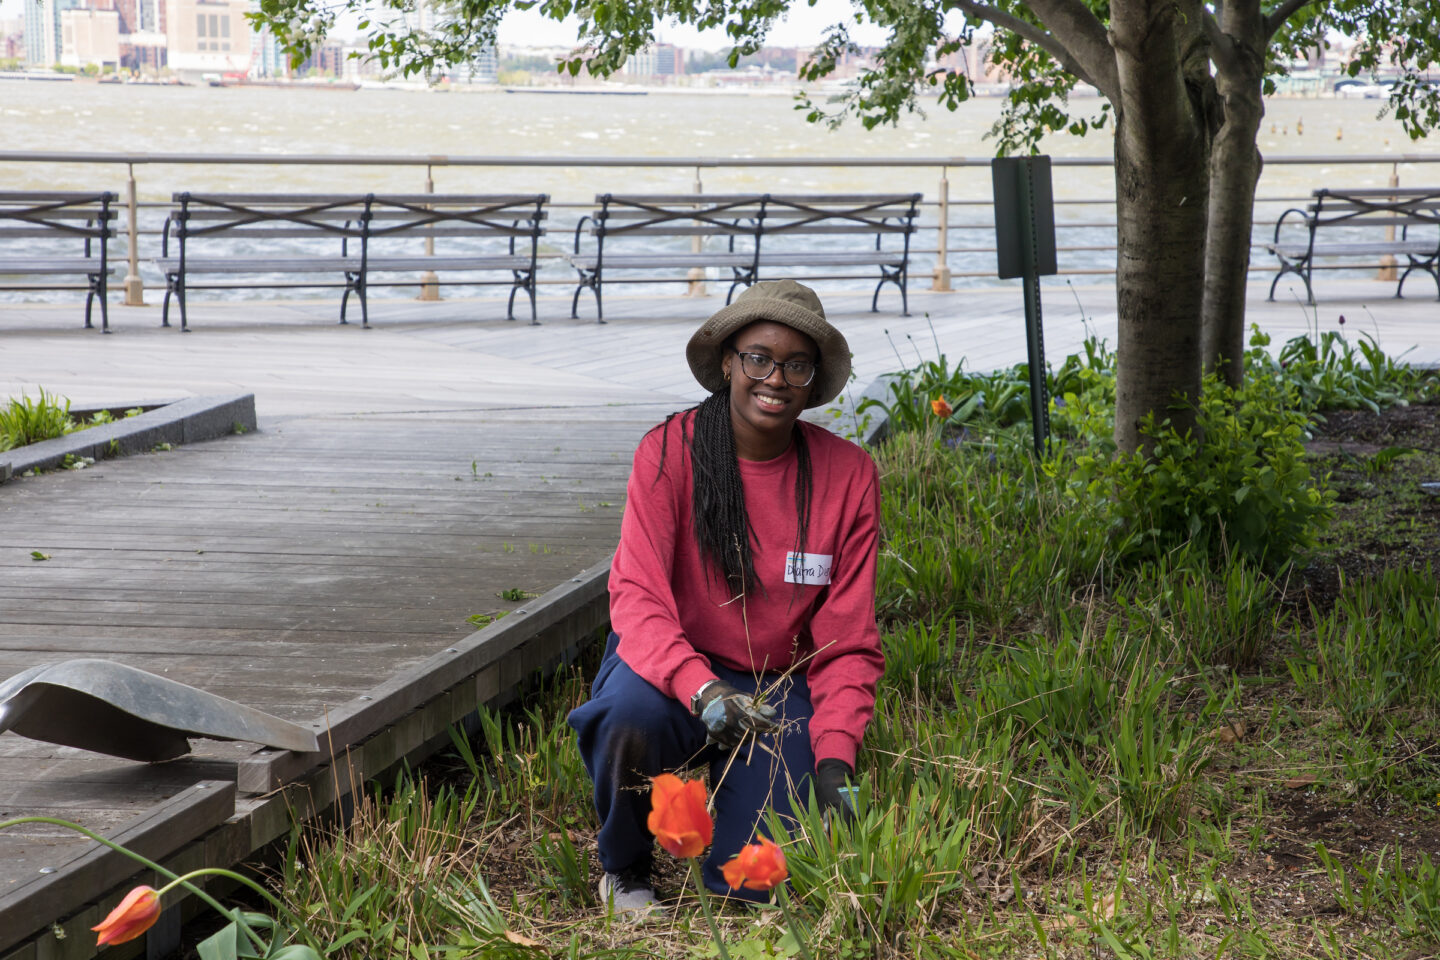 A gardener helps weed near Pier 34